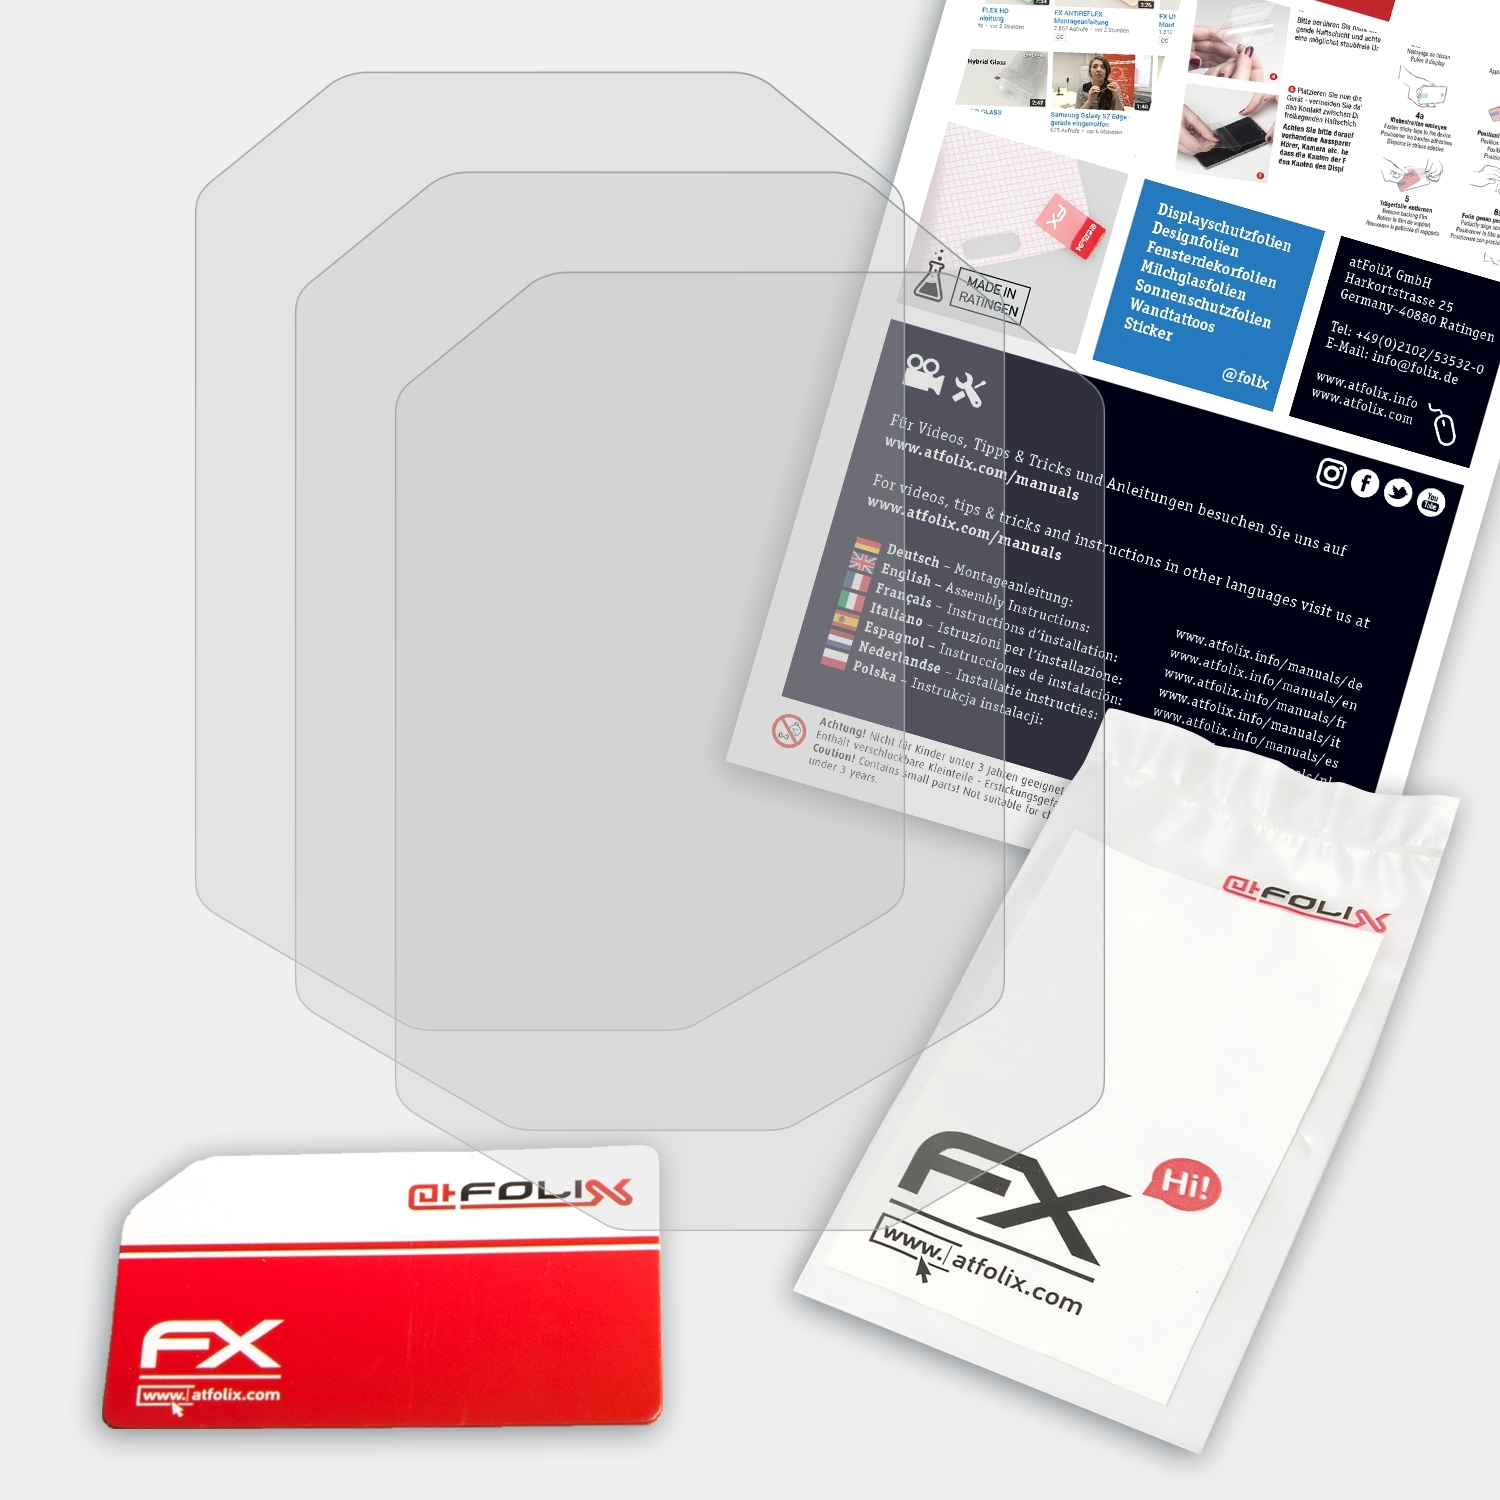 ATFOLIX 3x FX-Antireflex Displayschutz(für Crosscall X3) Shark